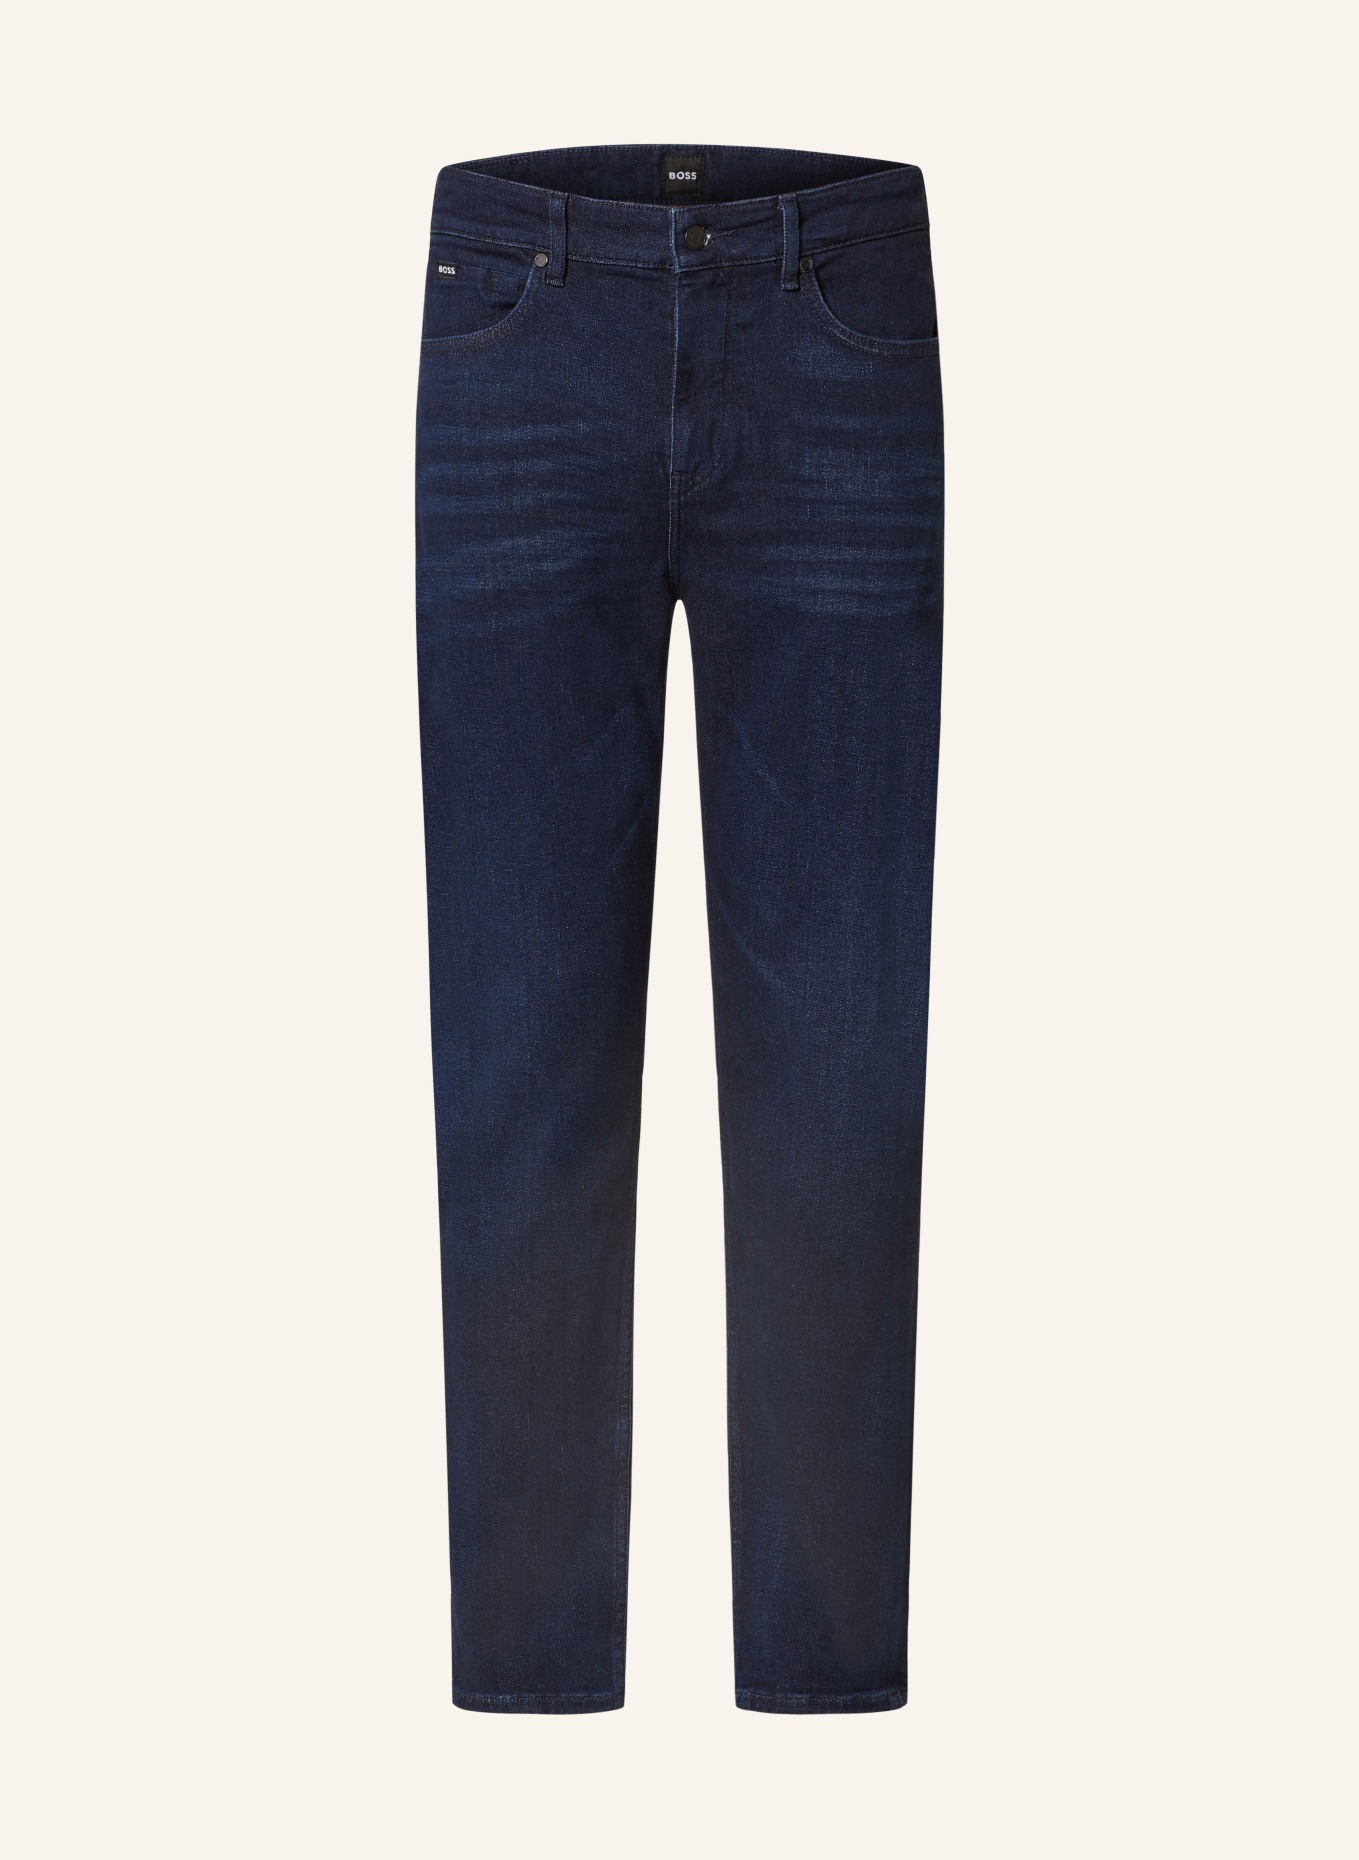 BOSS Jeans RE.MAINE Regular Fit, Farbe: 415 NAVY (Bild 1)